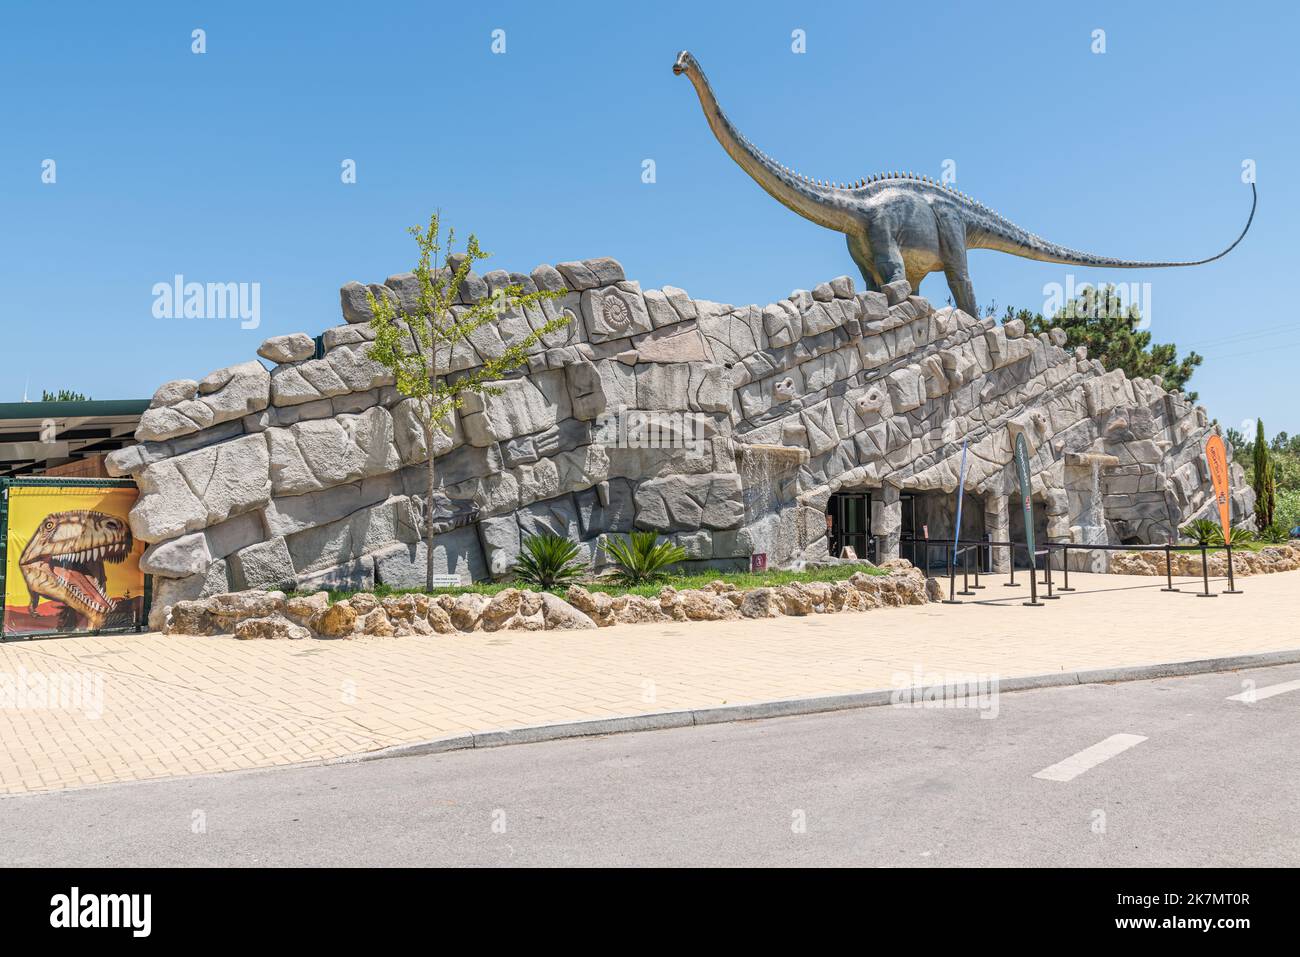 La entrada principal a Dino Parque Lourinha con un modelo de dinosaurio de  tamaño natural, Portugal Fotografía de stock - Alamy